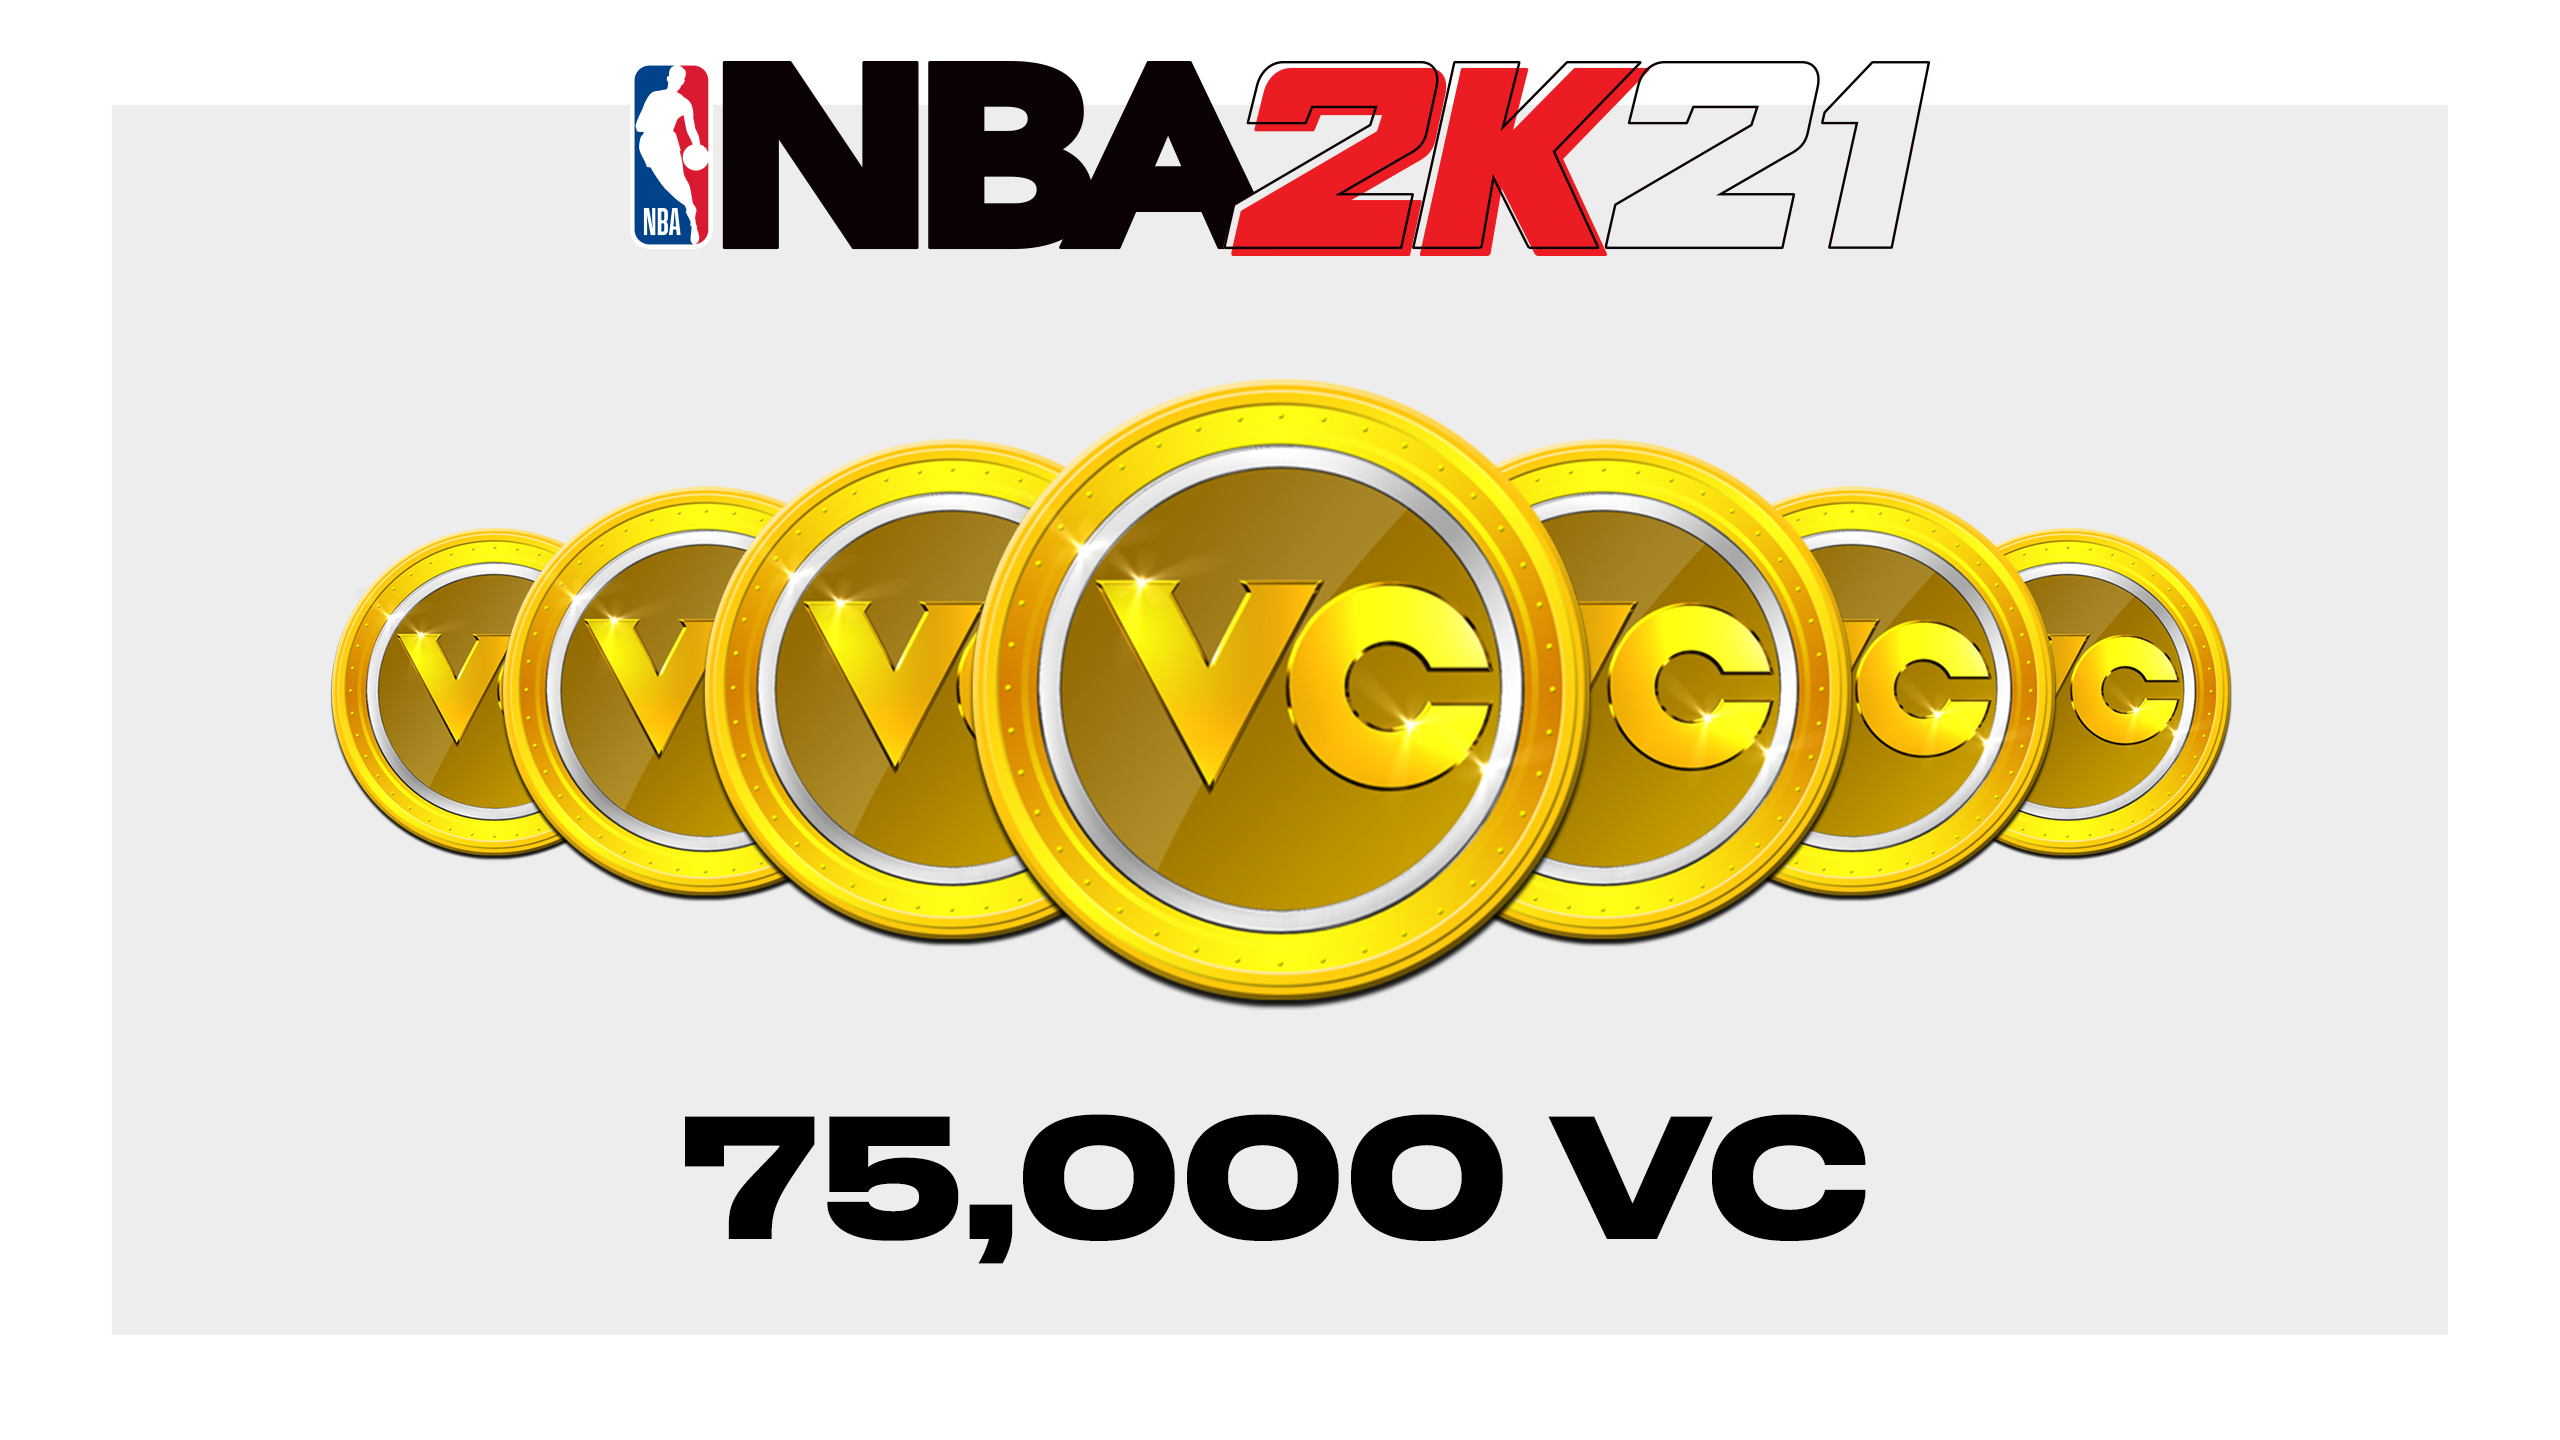 《NBA2K》因抽卡内购系统遭集体诉讼 被索赔500万美元